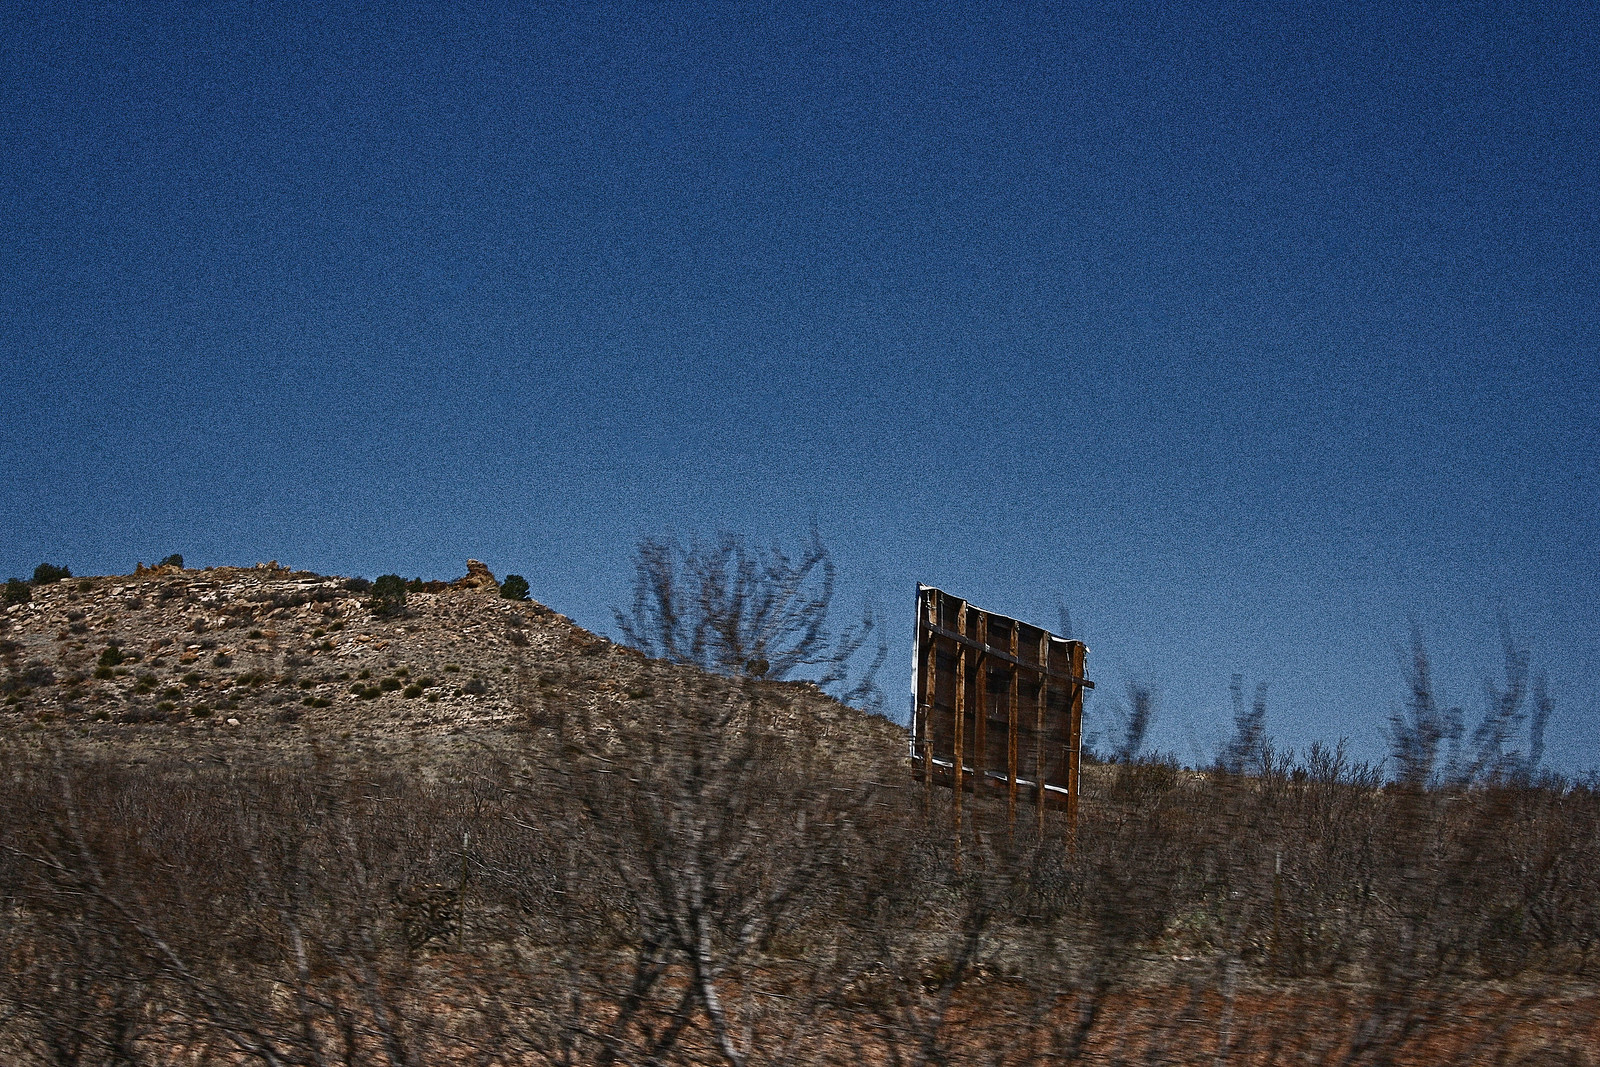 Beyond Tucumcari, New Mexico, 2008, processed 2021